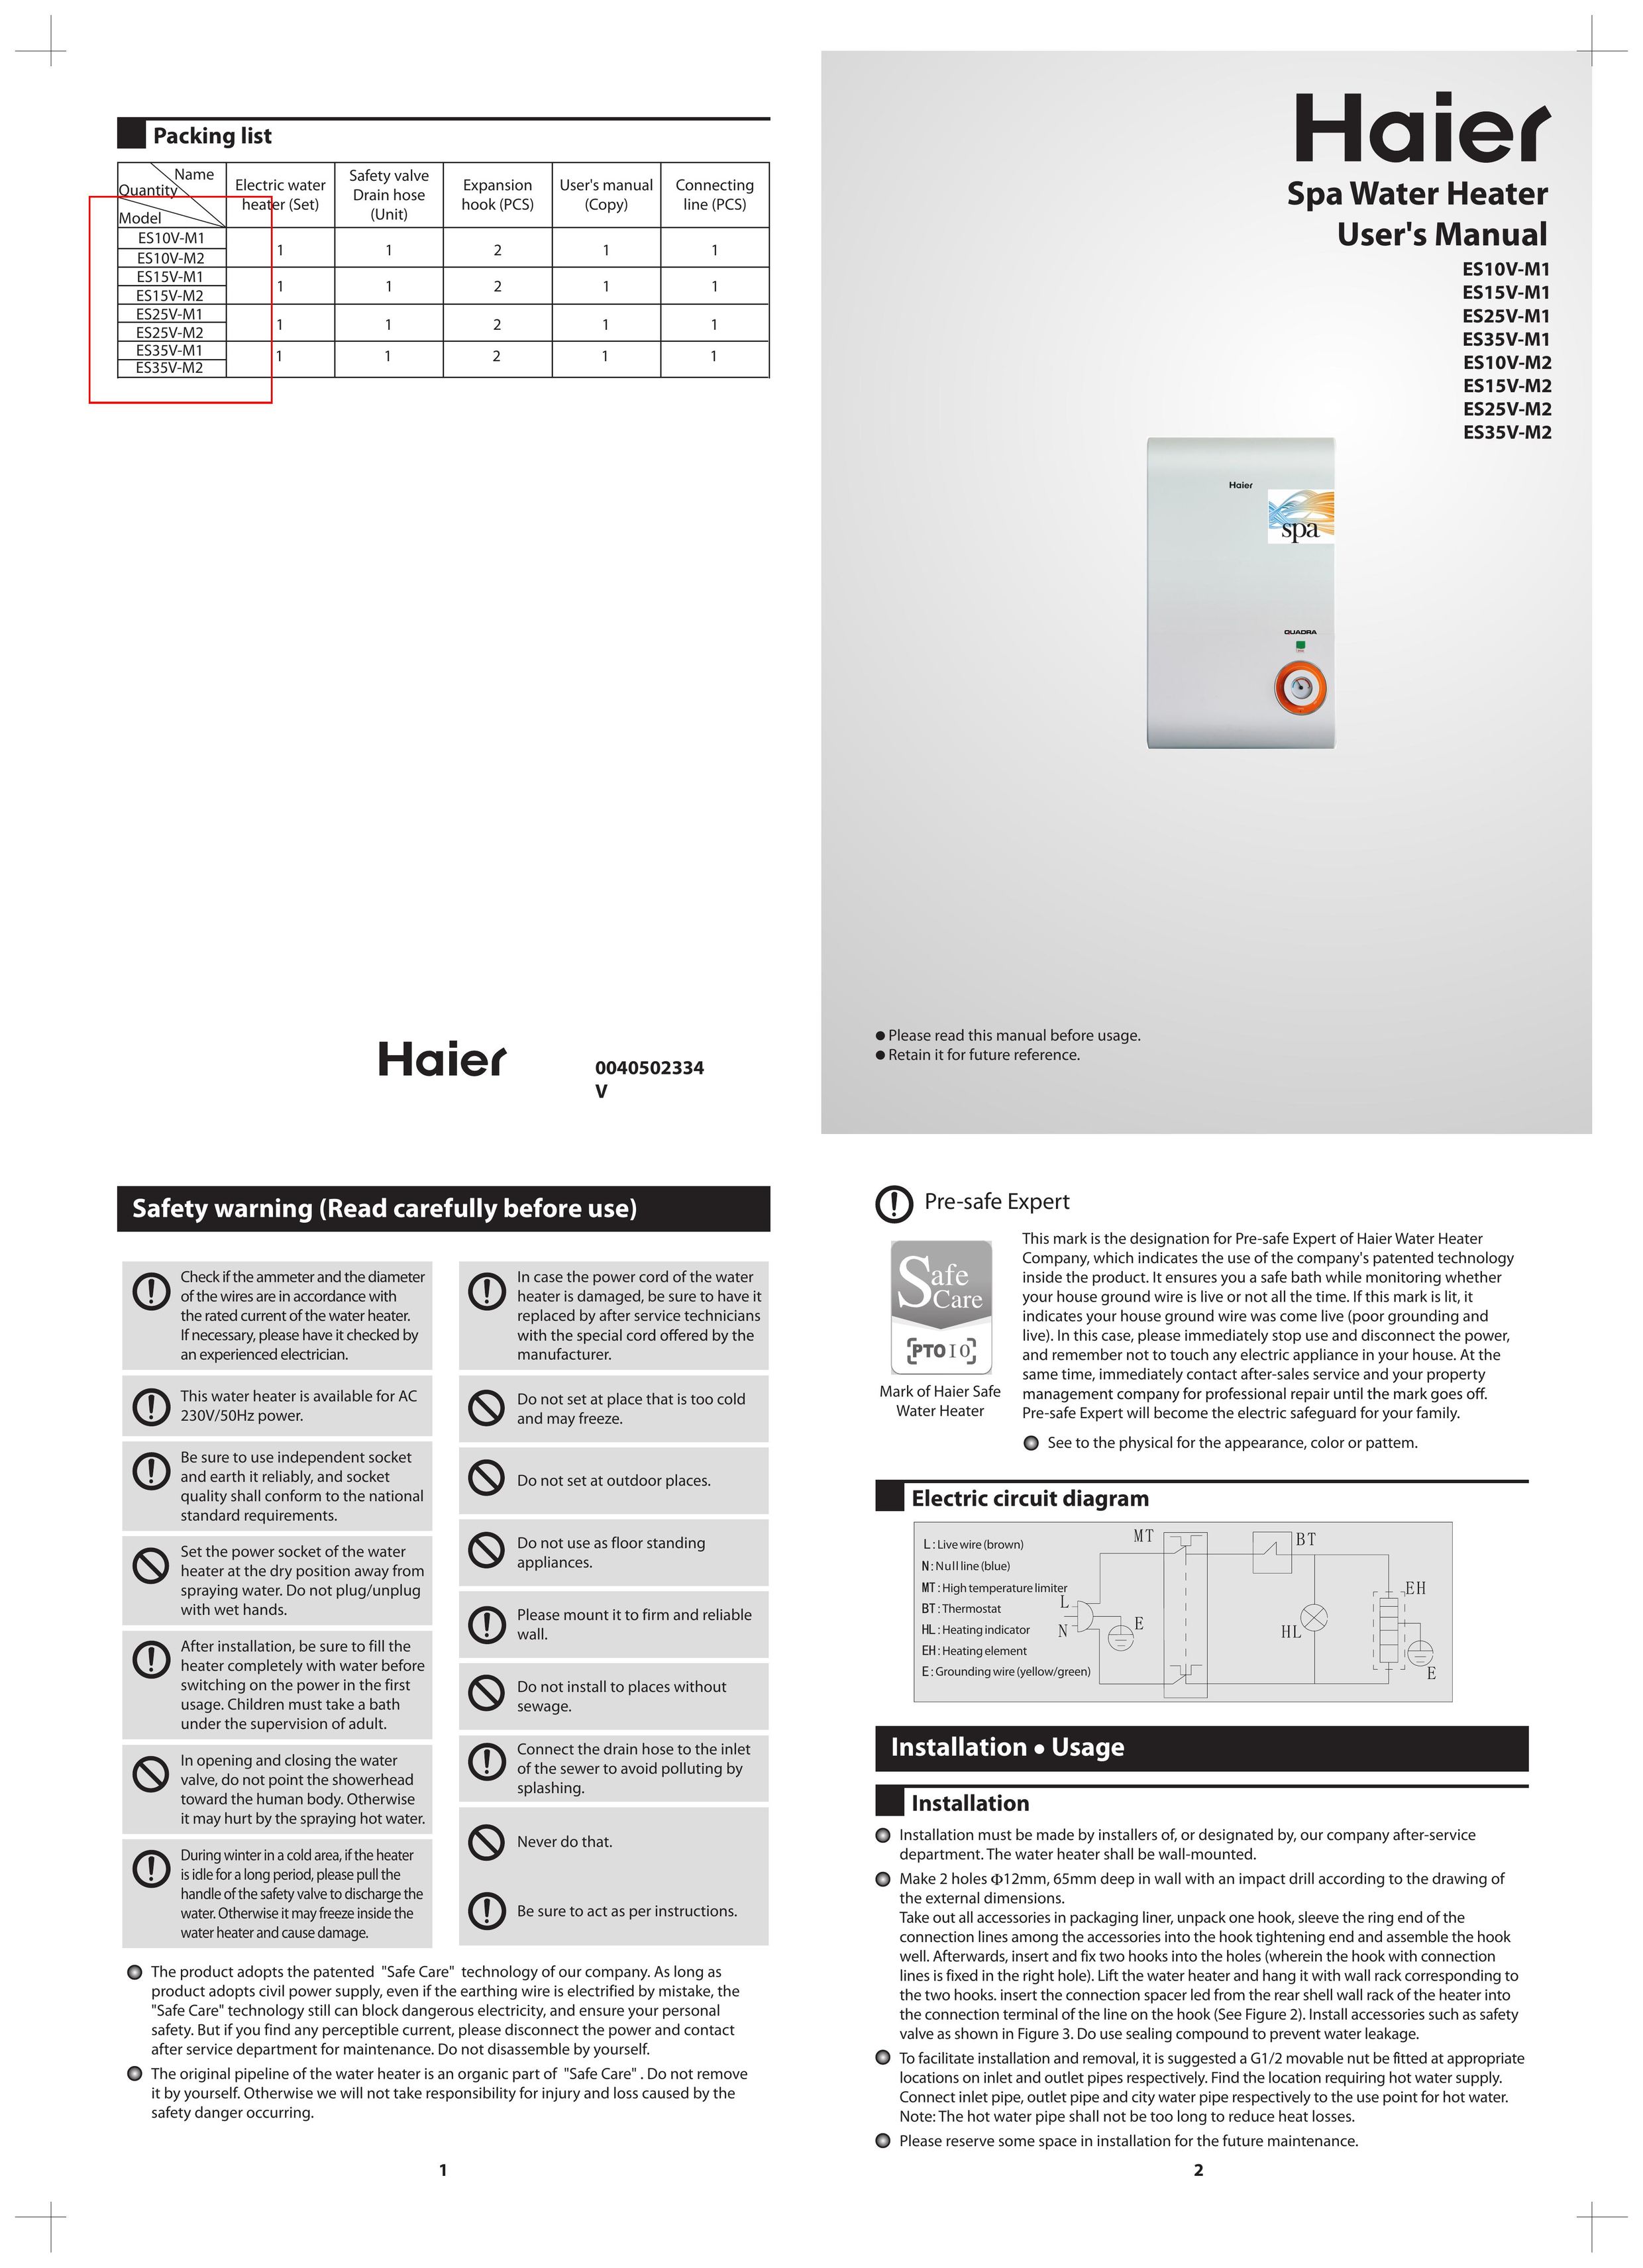 Haier ES15V-M1 Water Heater User Manual